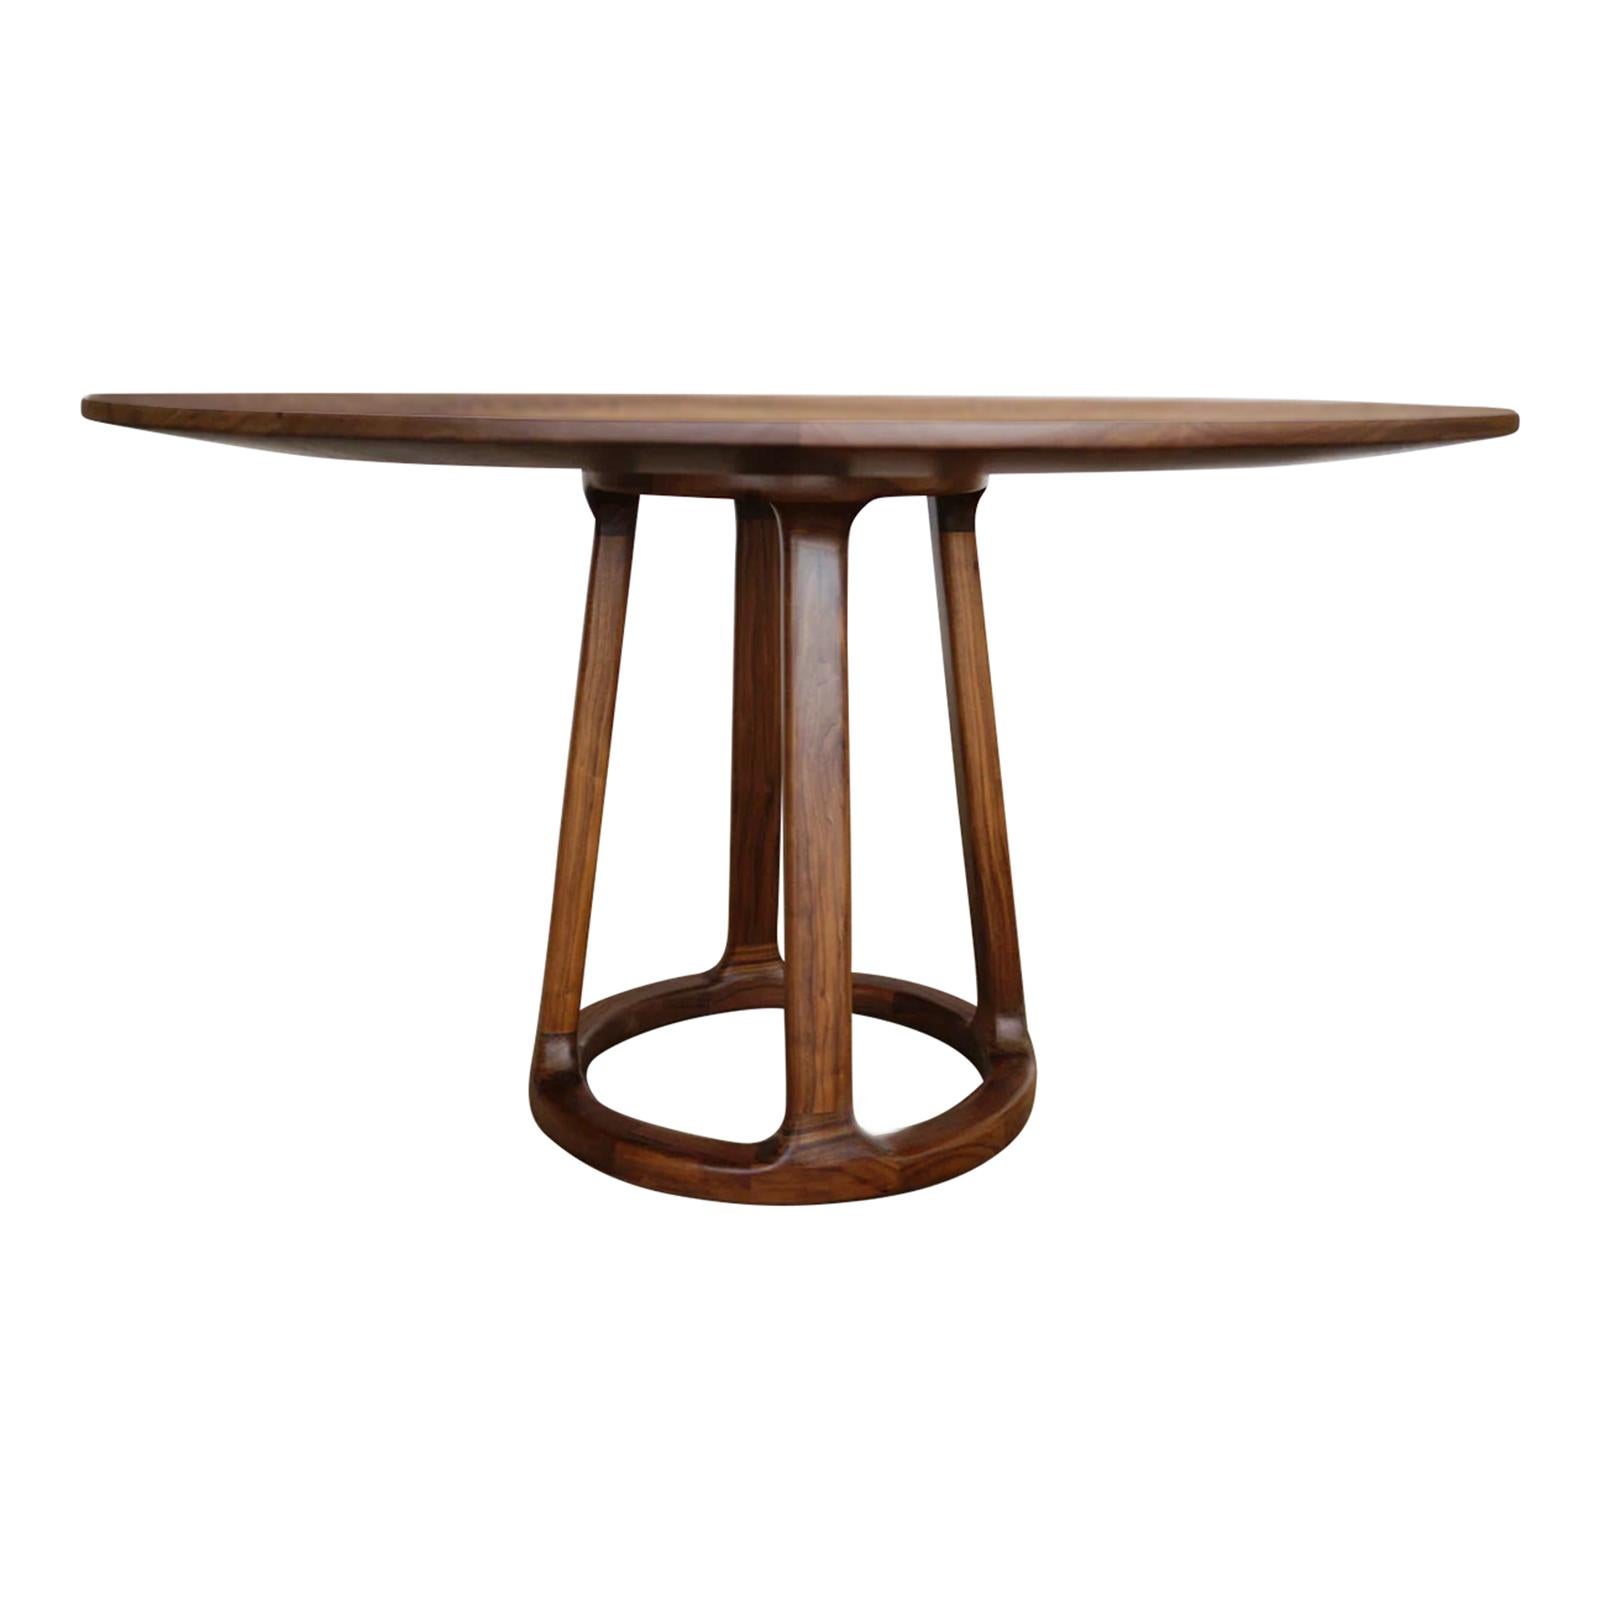 Orenn Table in Walnut Wood, Hand-Sculpted Table by Kokora For Sale